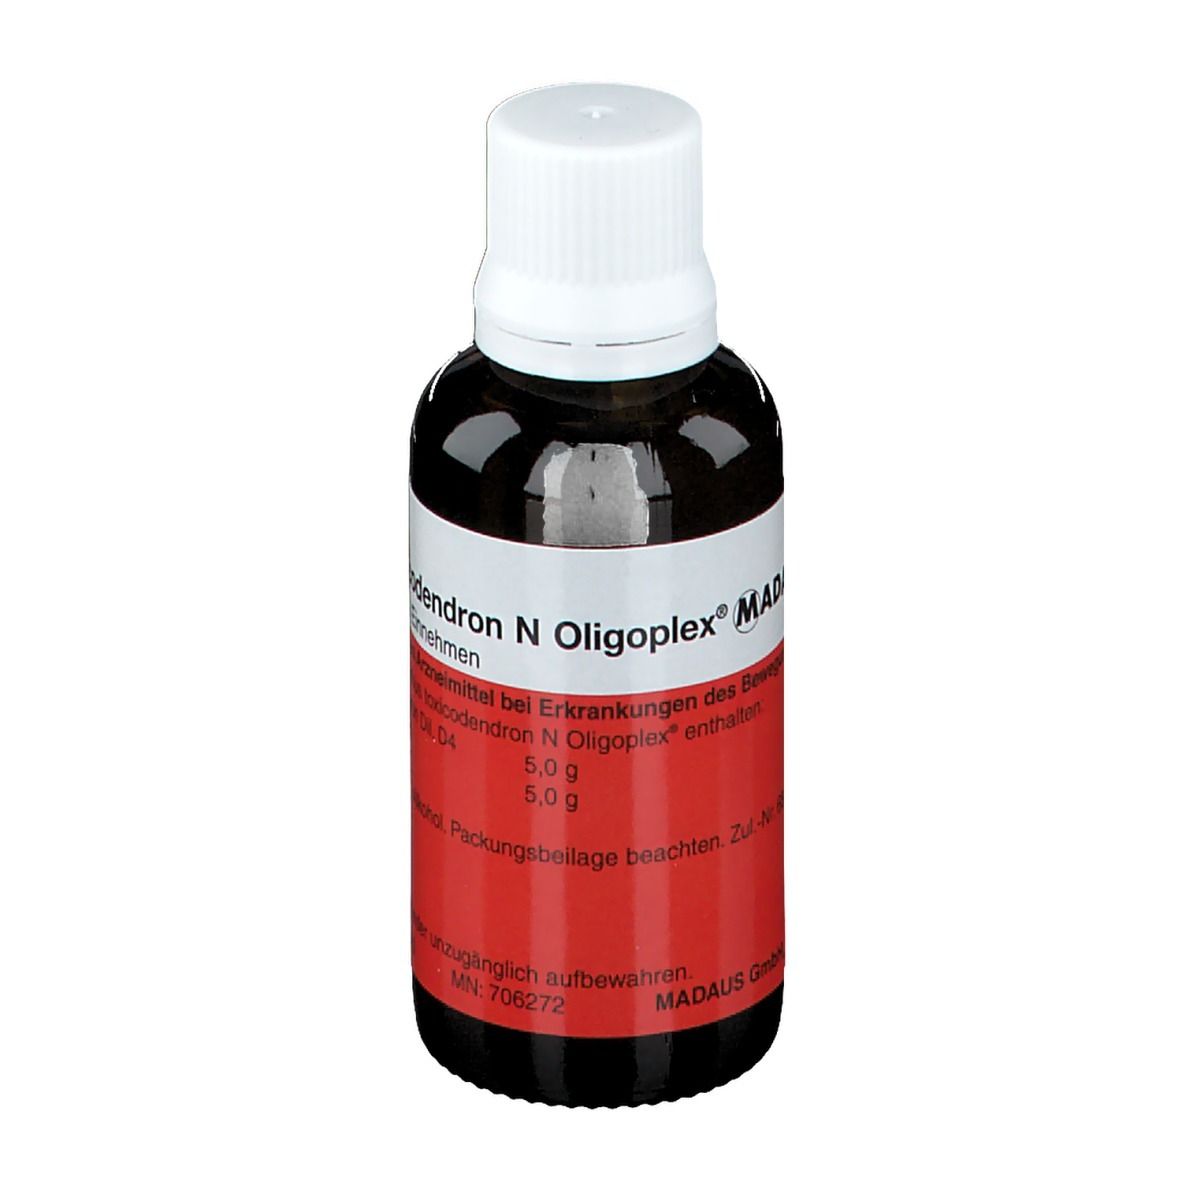 Rhus toxicodendron N Oligoplex®